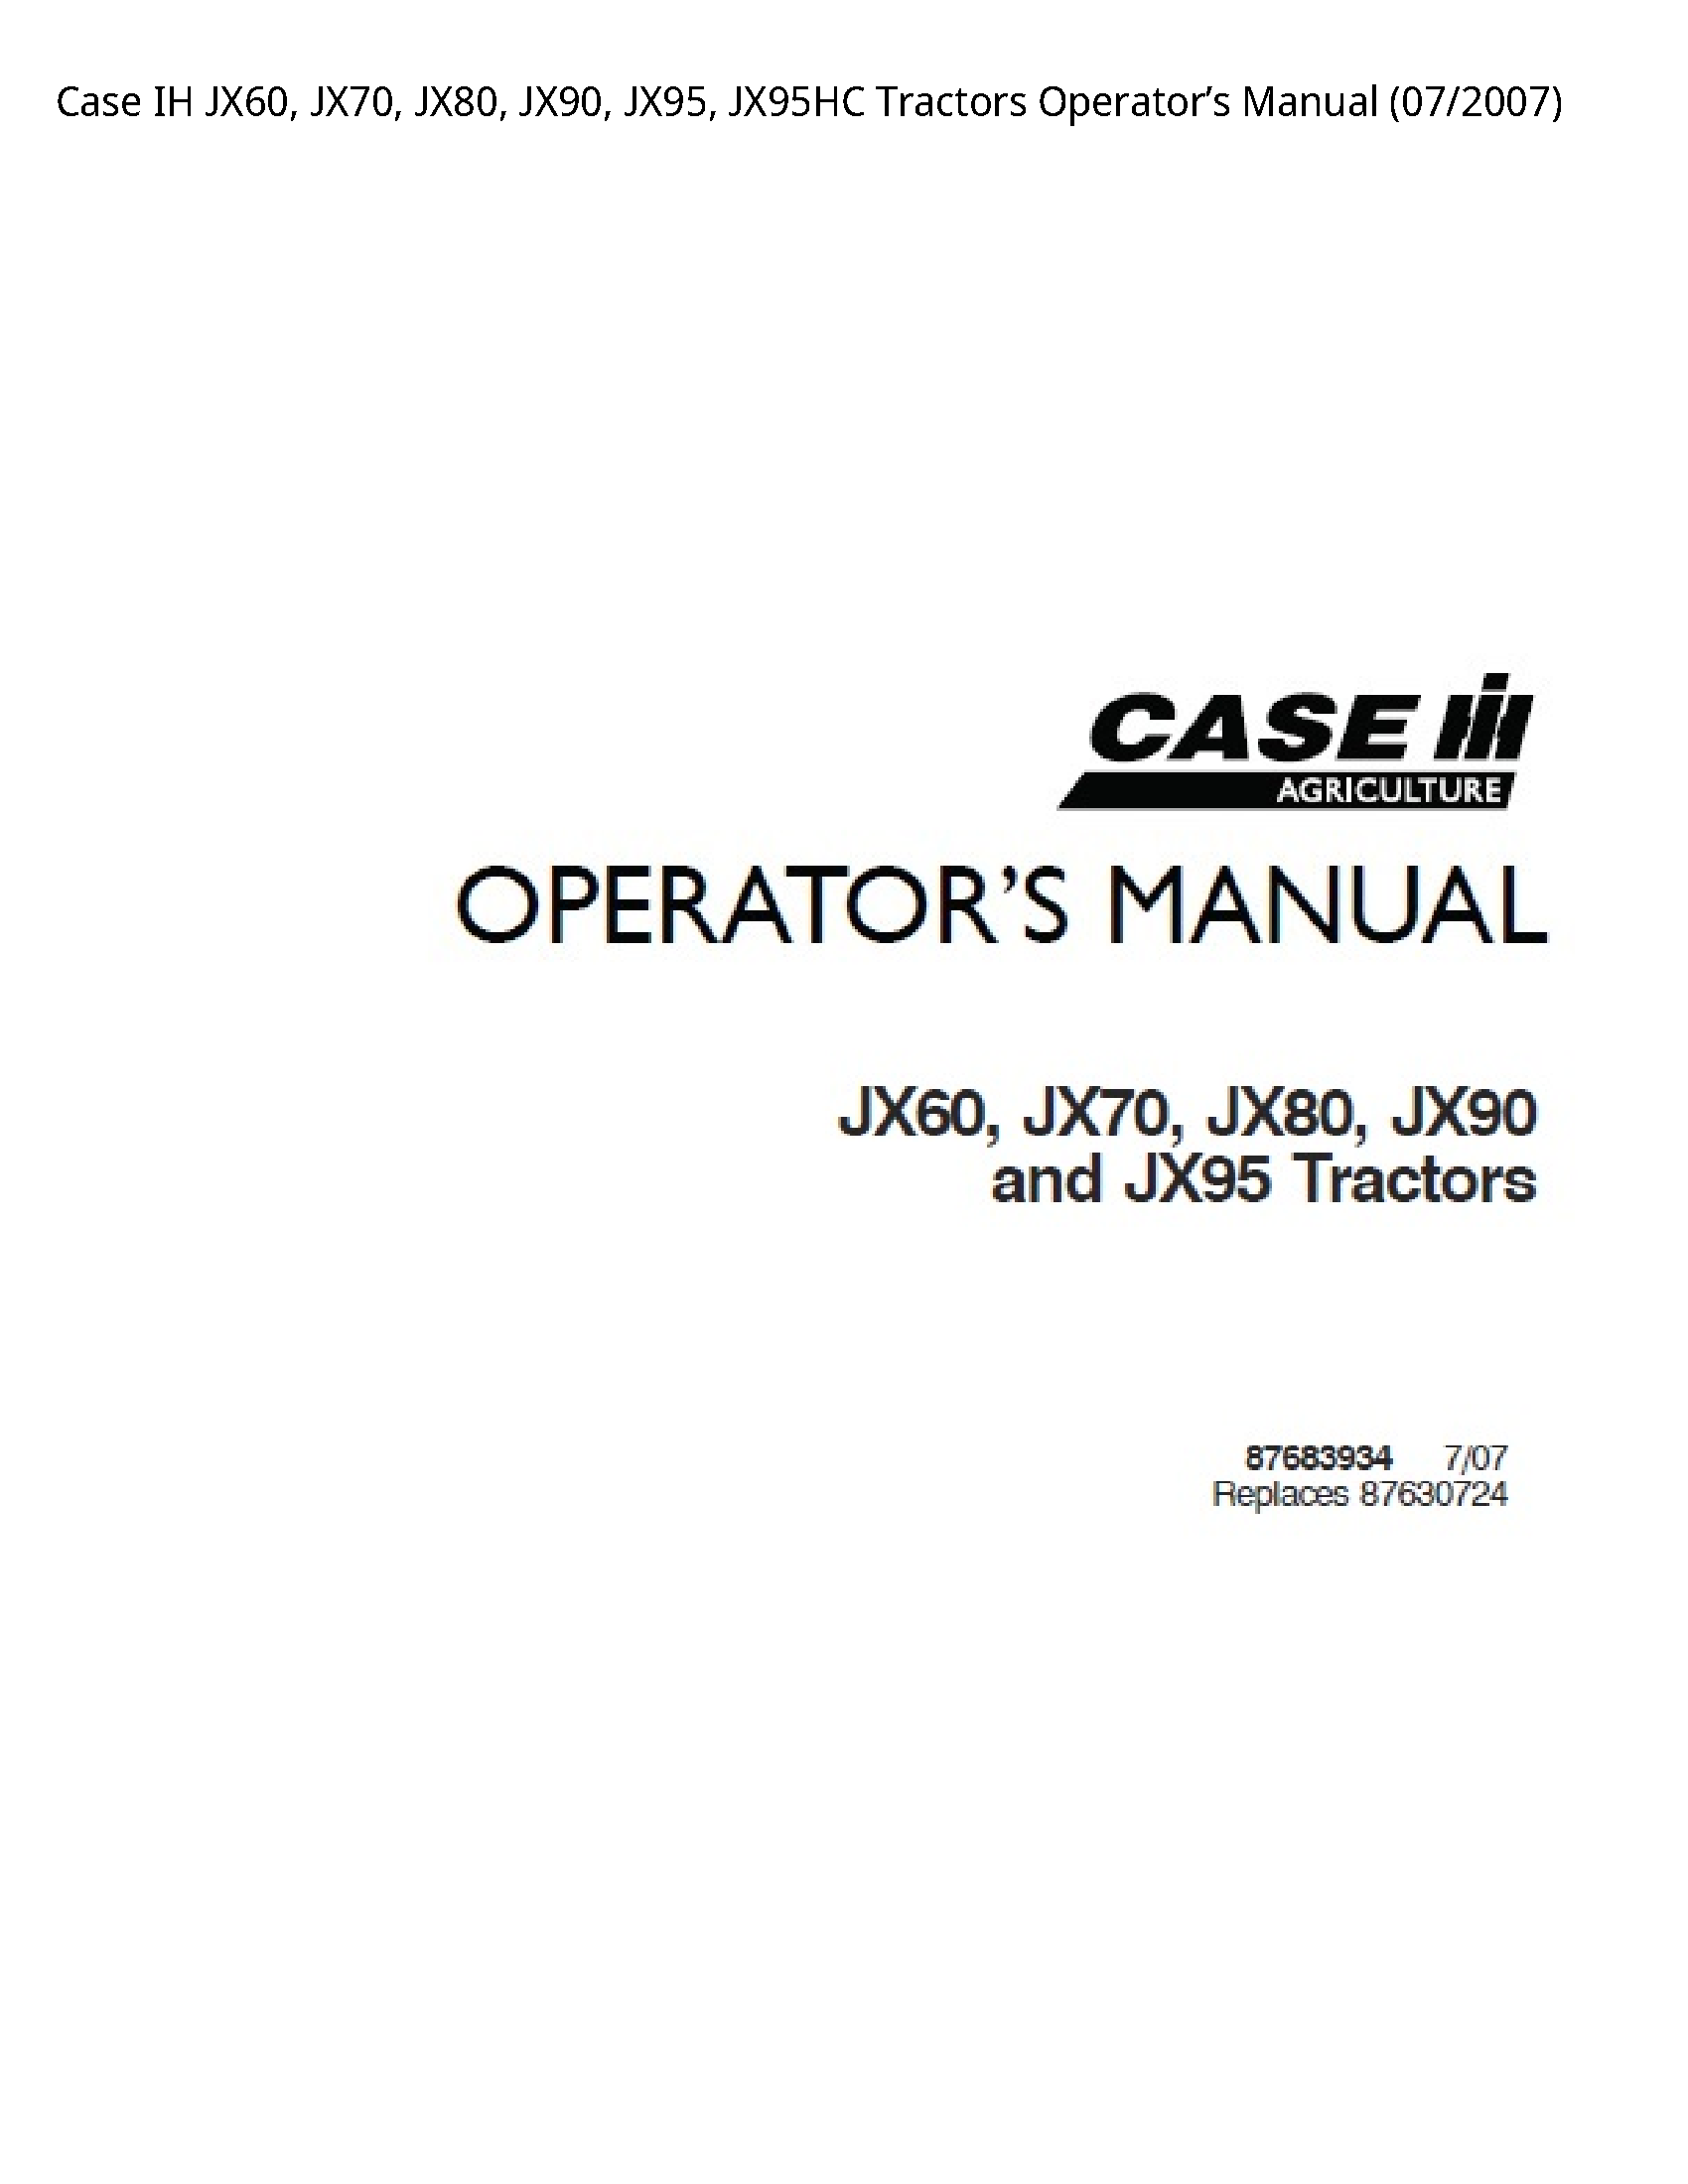 Case/Case IH JX60 IH Tractors Operator’s manual